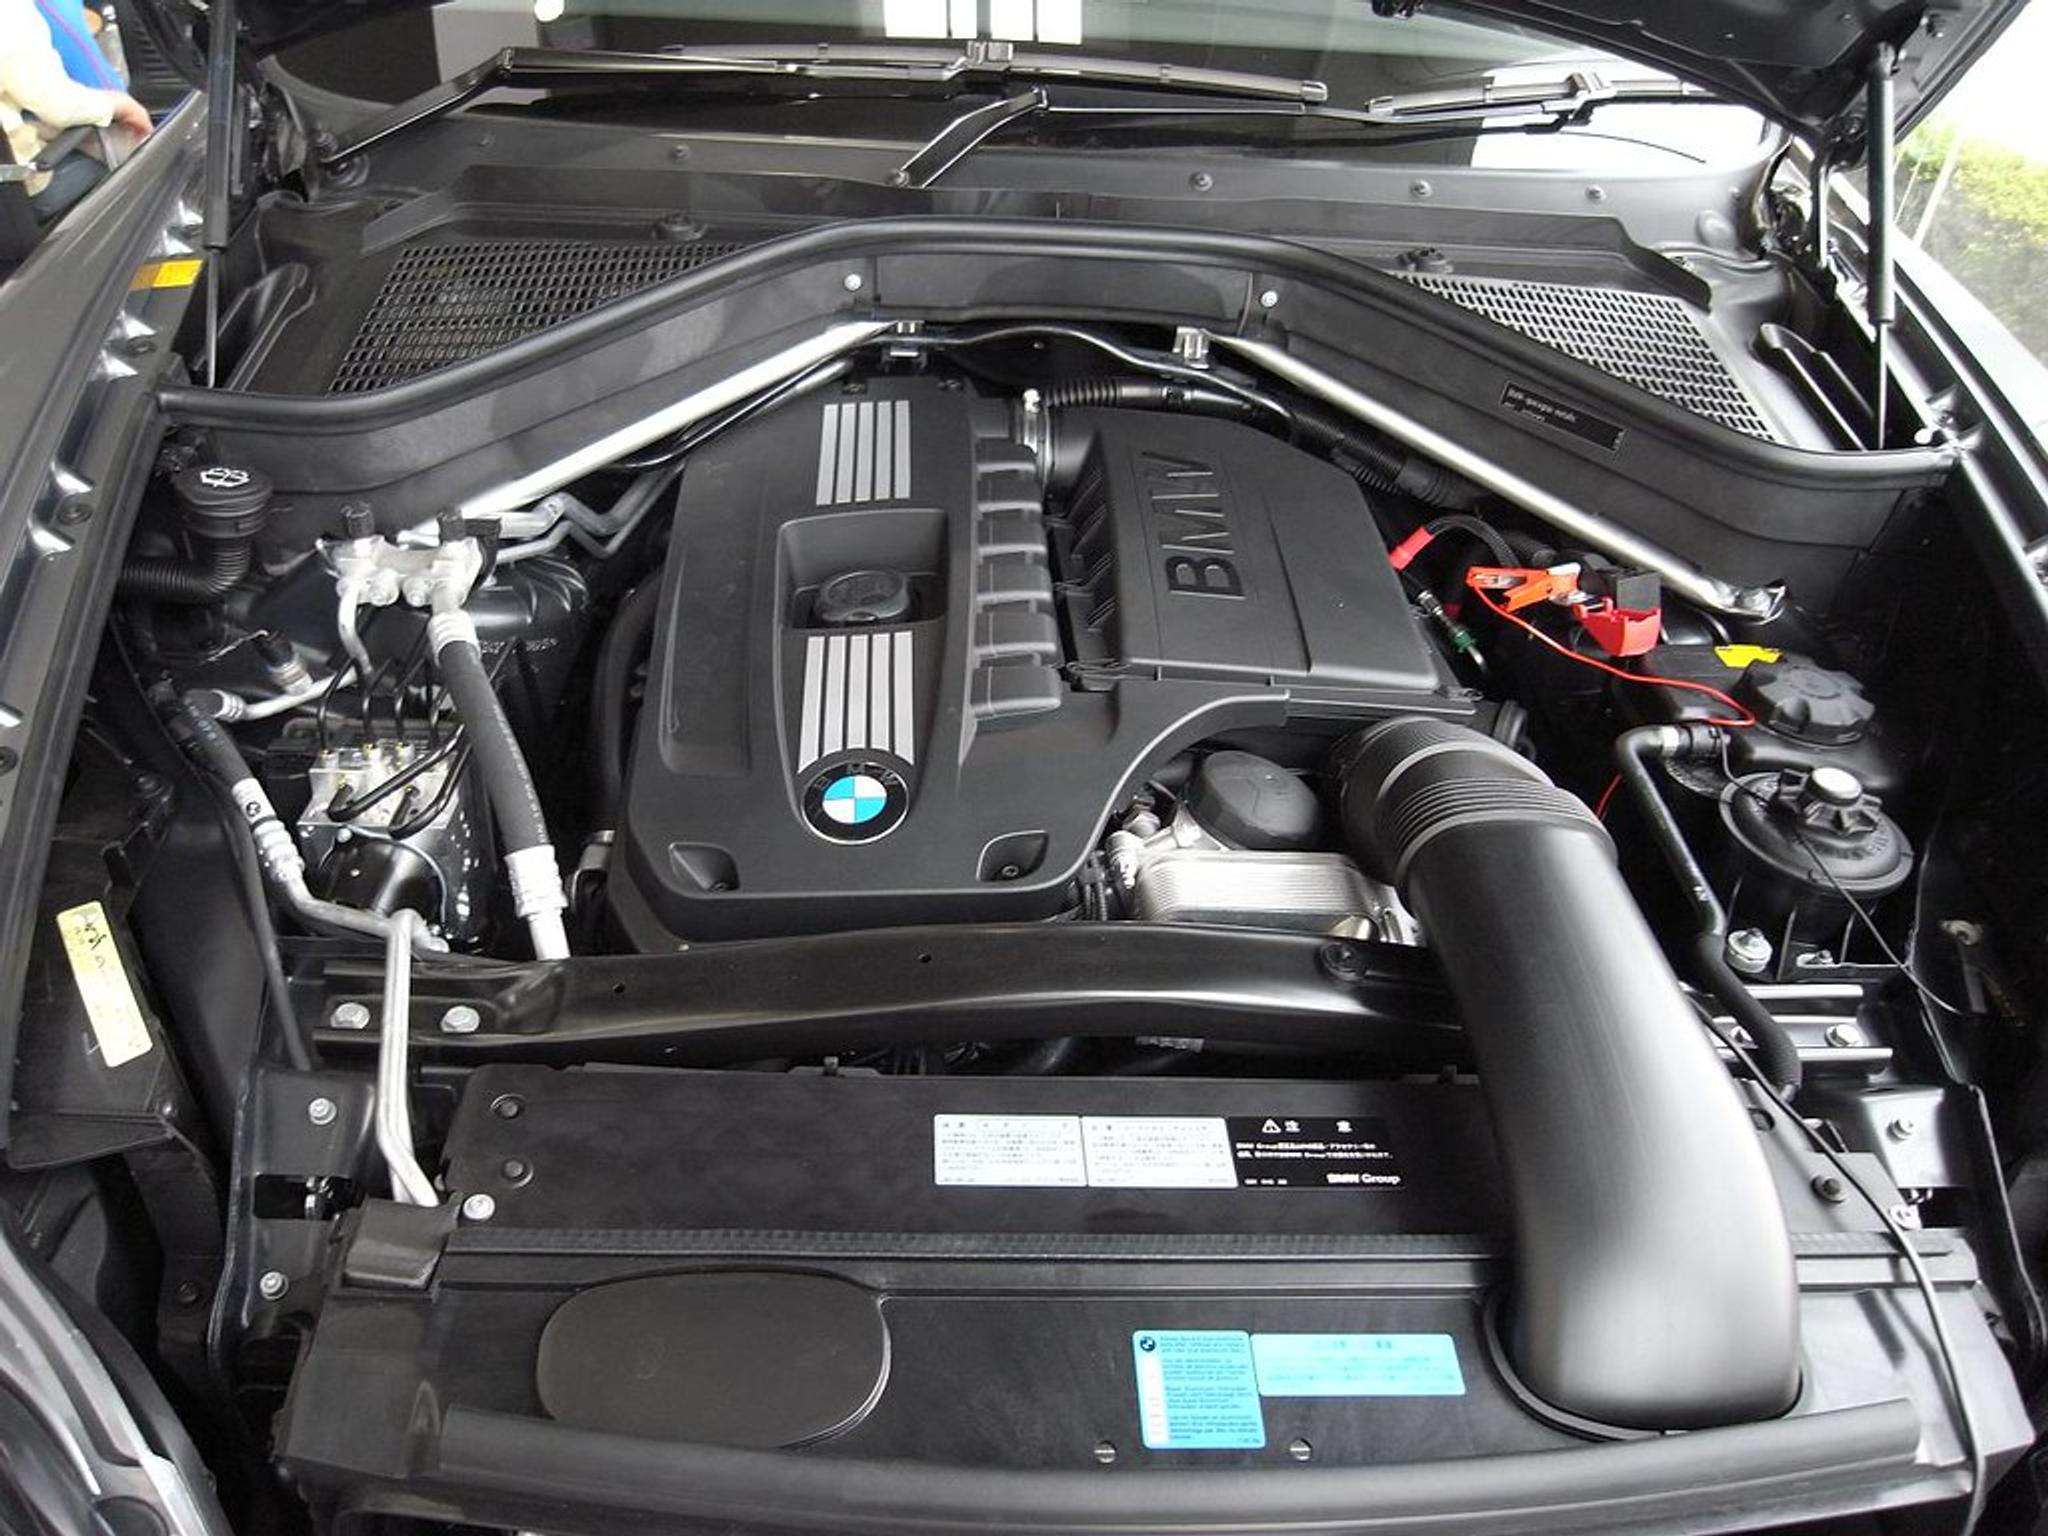 BMW engine bay